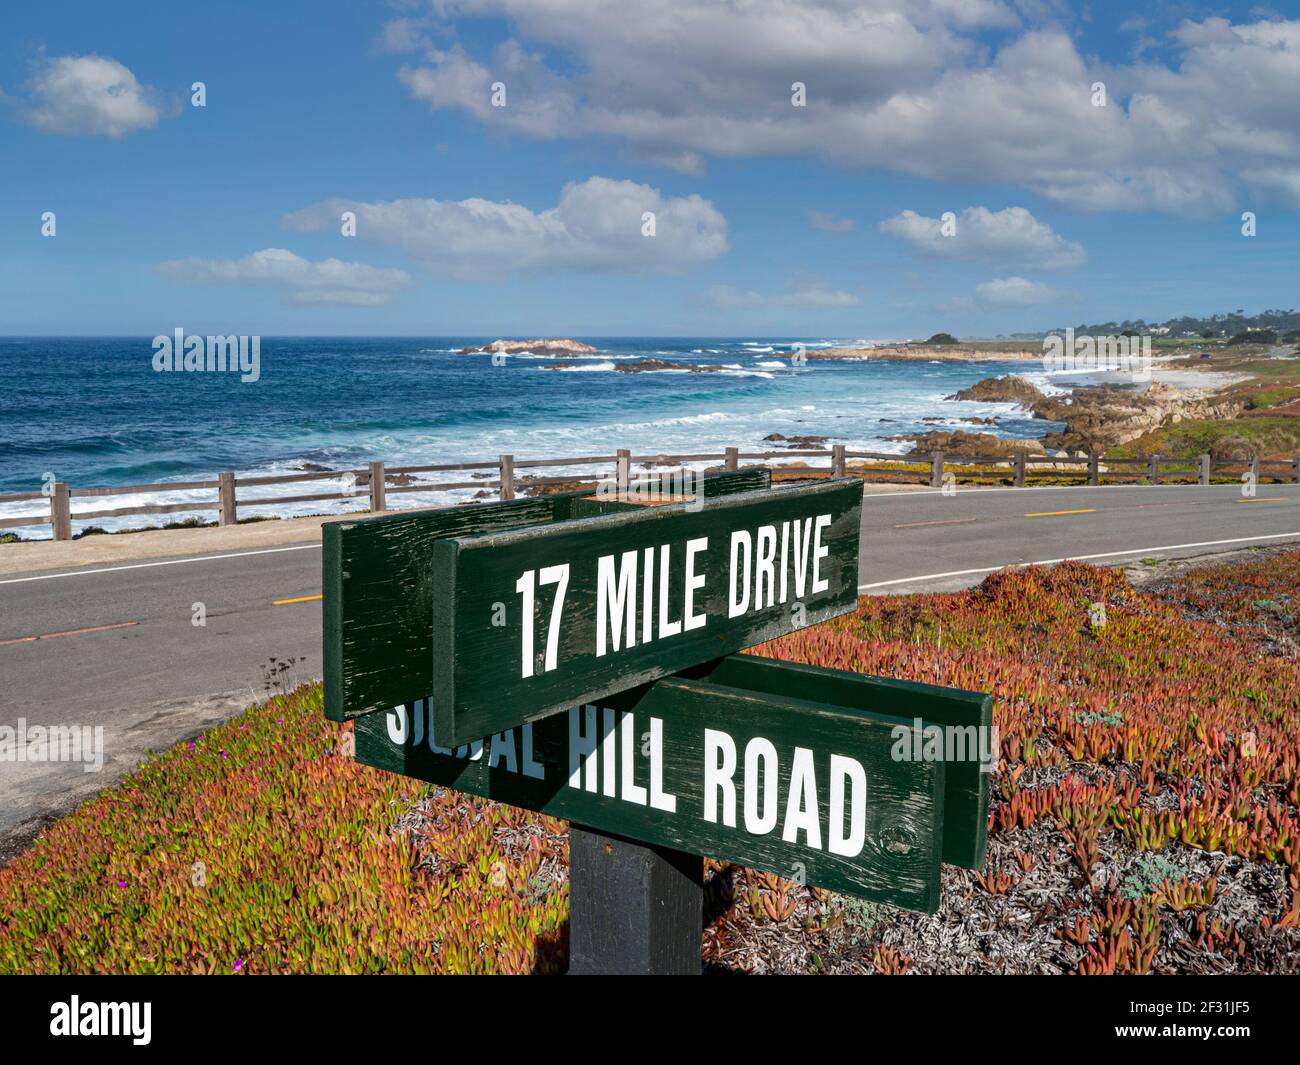 PEBBLE BEACH 17 mile drive coast road sign, scenic Pacific sea route through Pacific Grove and Pebble Beach on the Monterey Peninsula California USA - Stock Photo